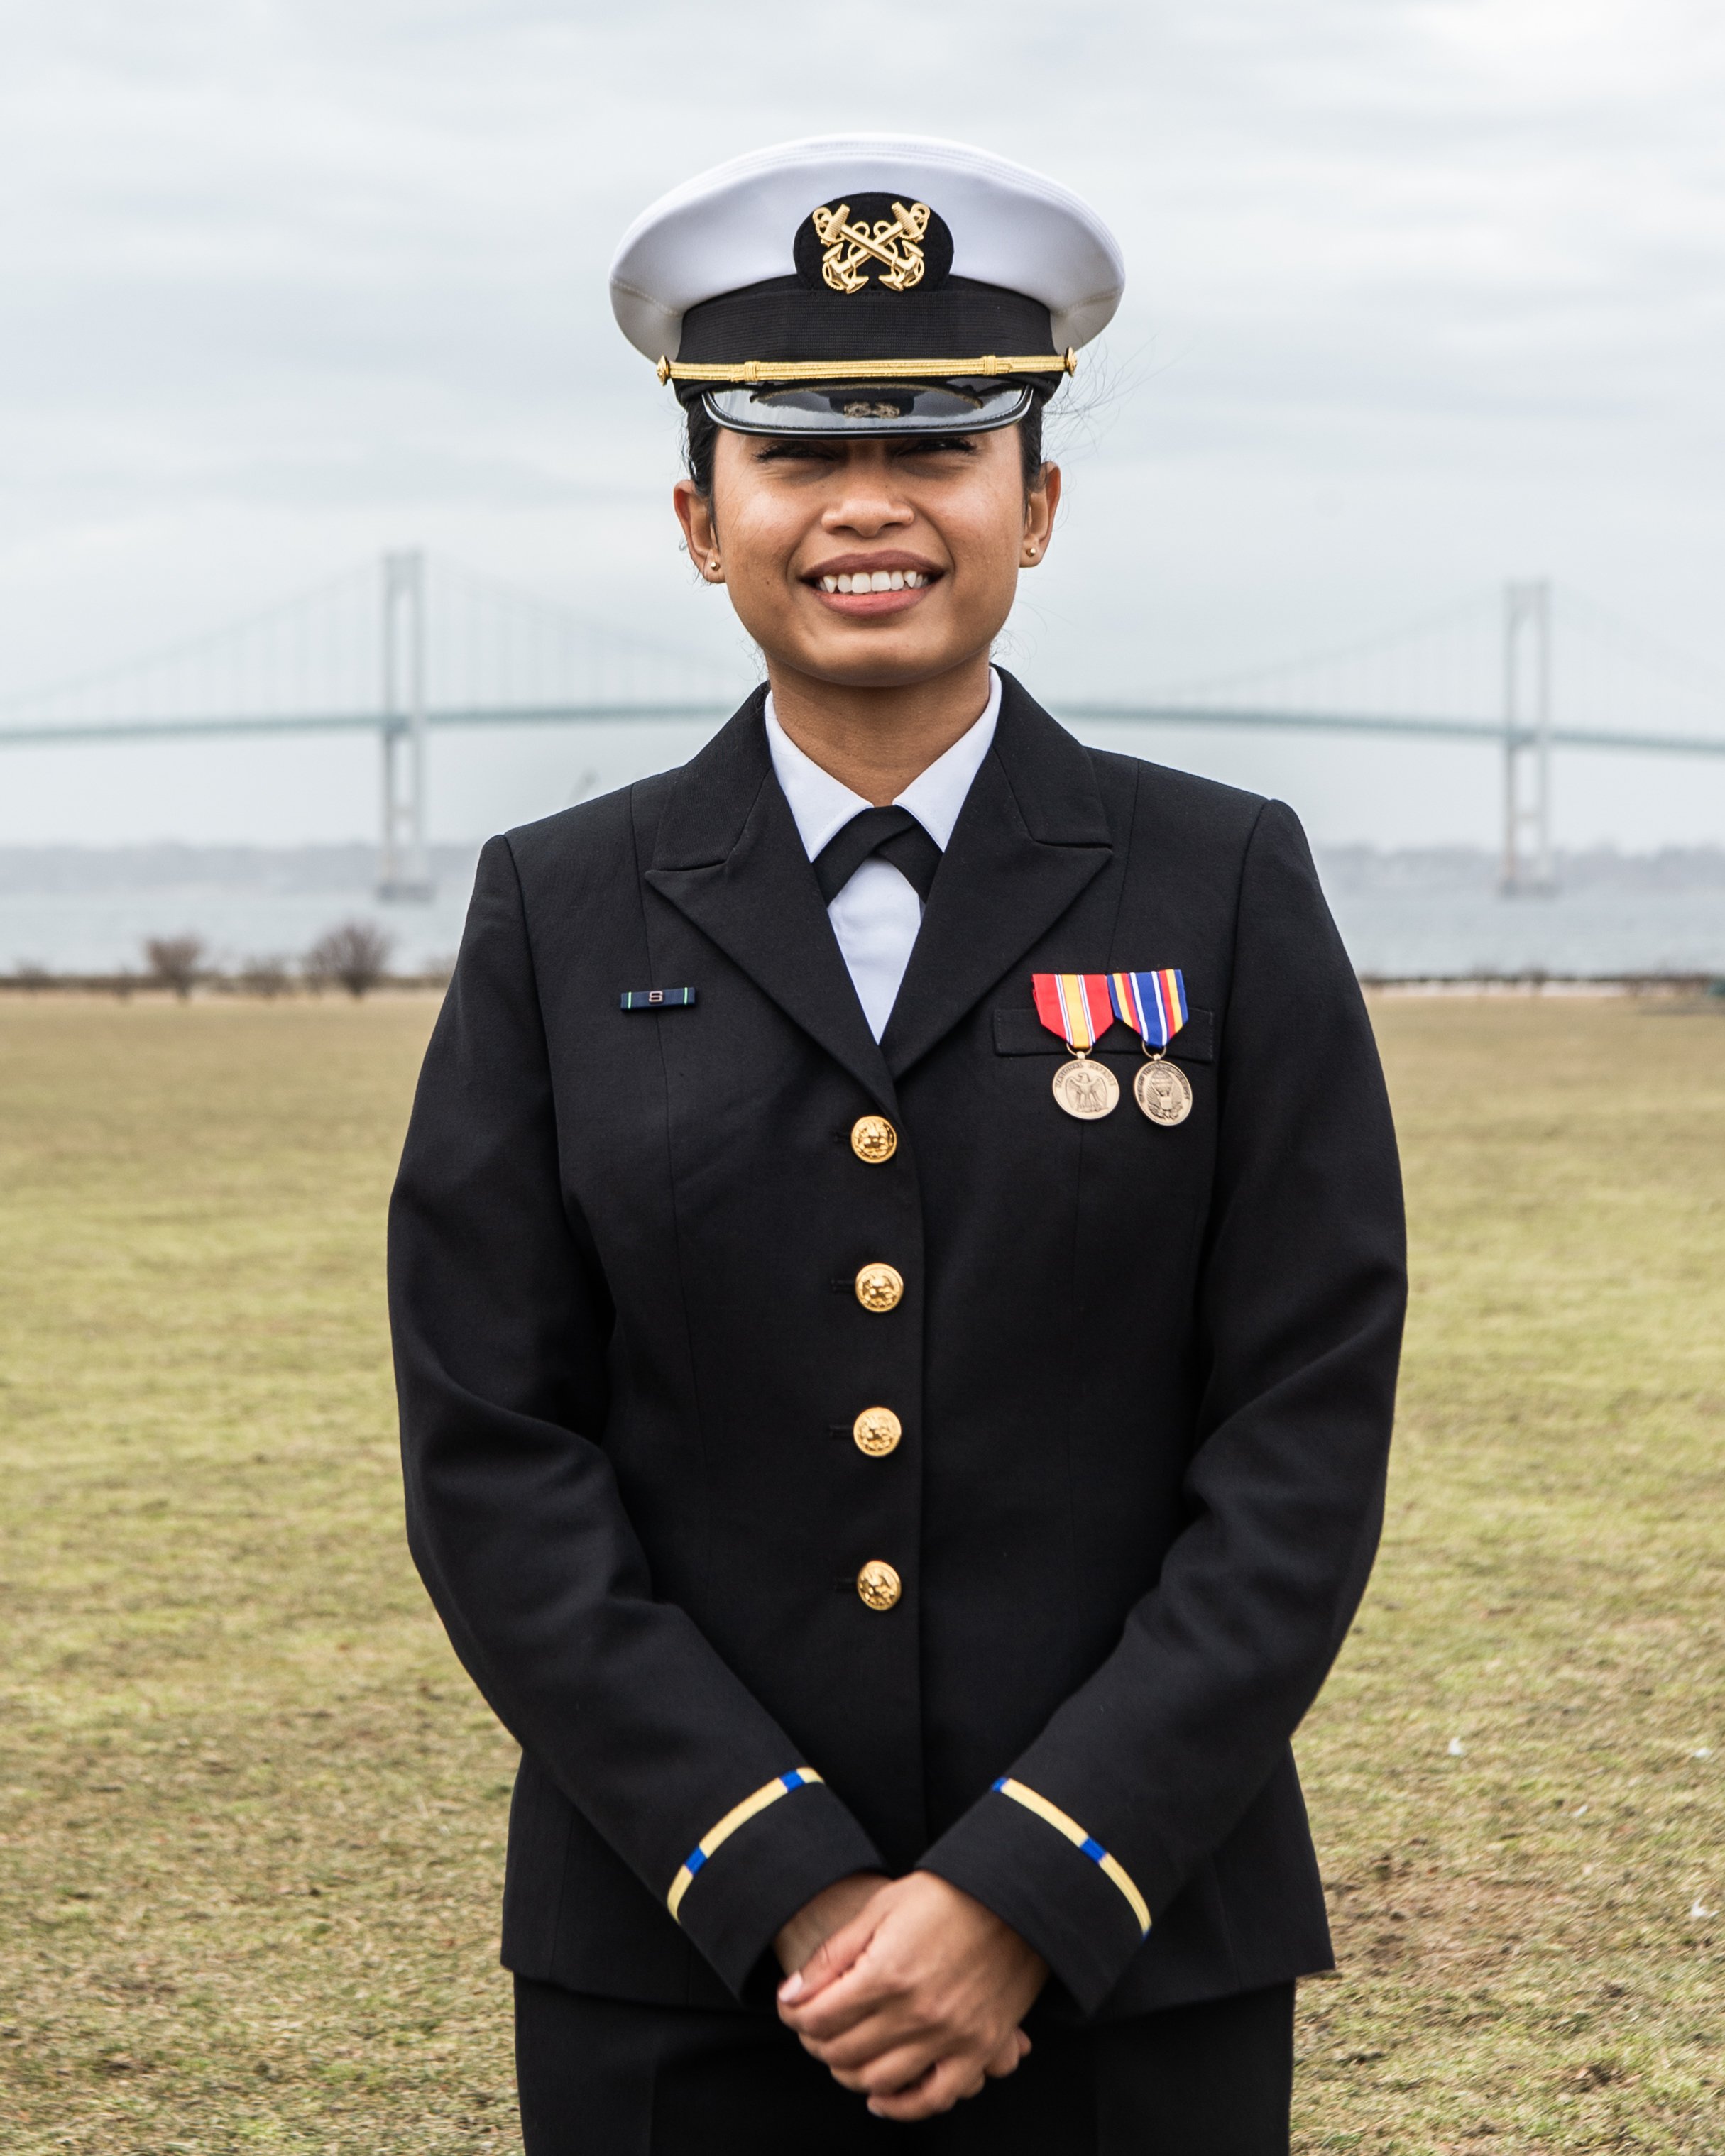 navy officer dress blues